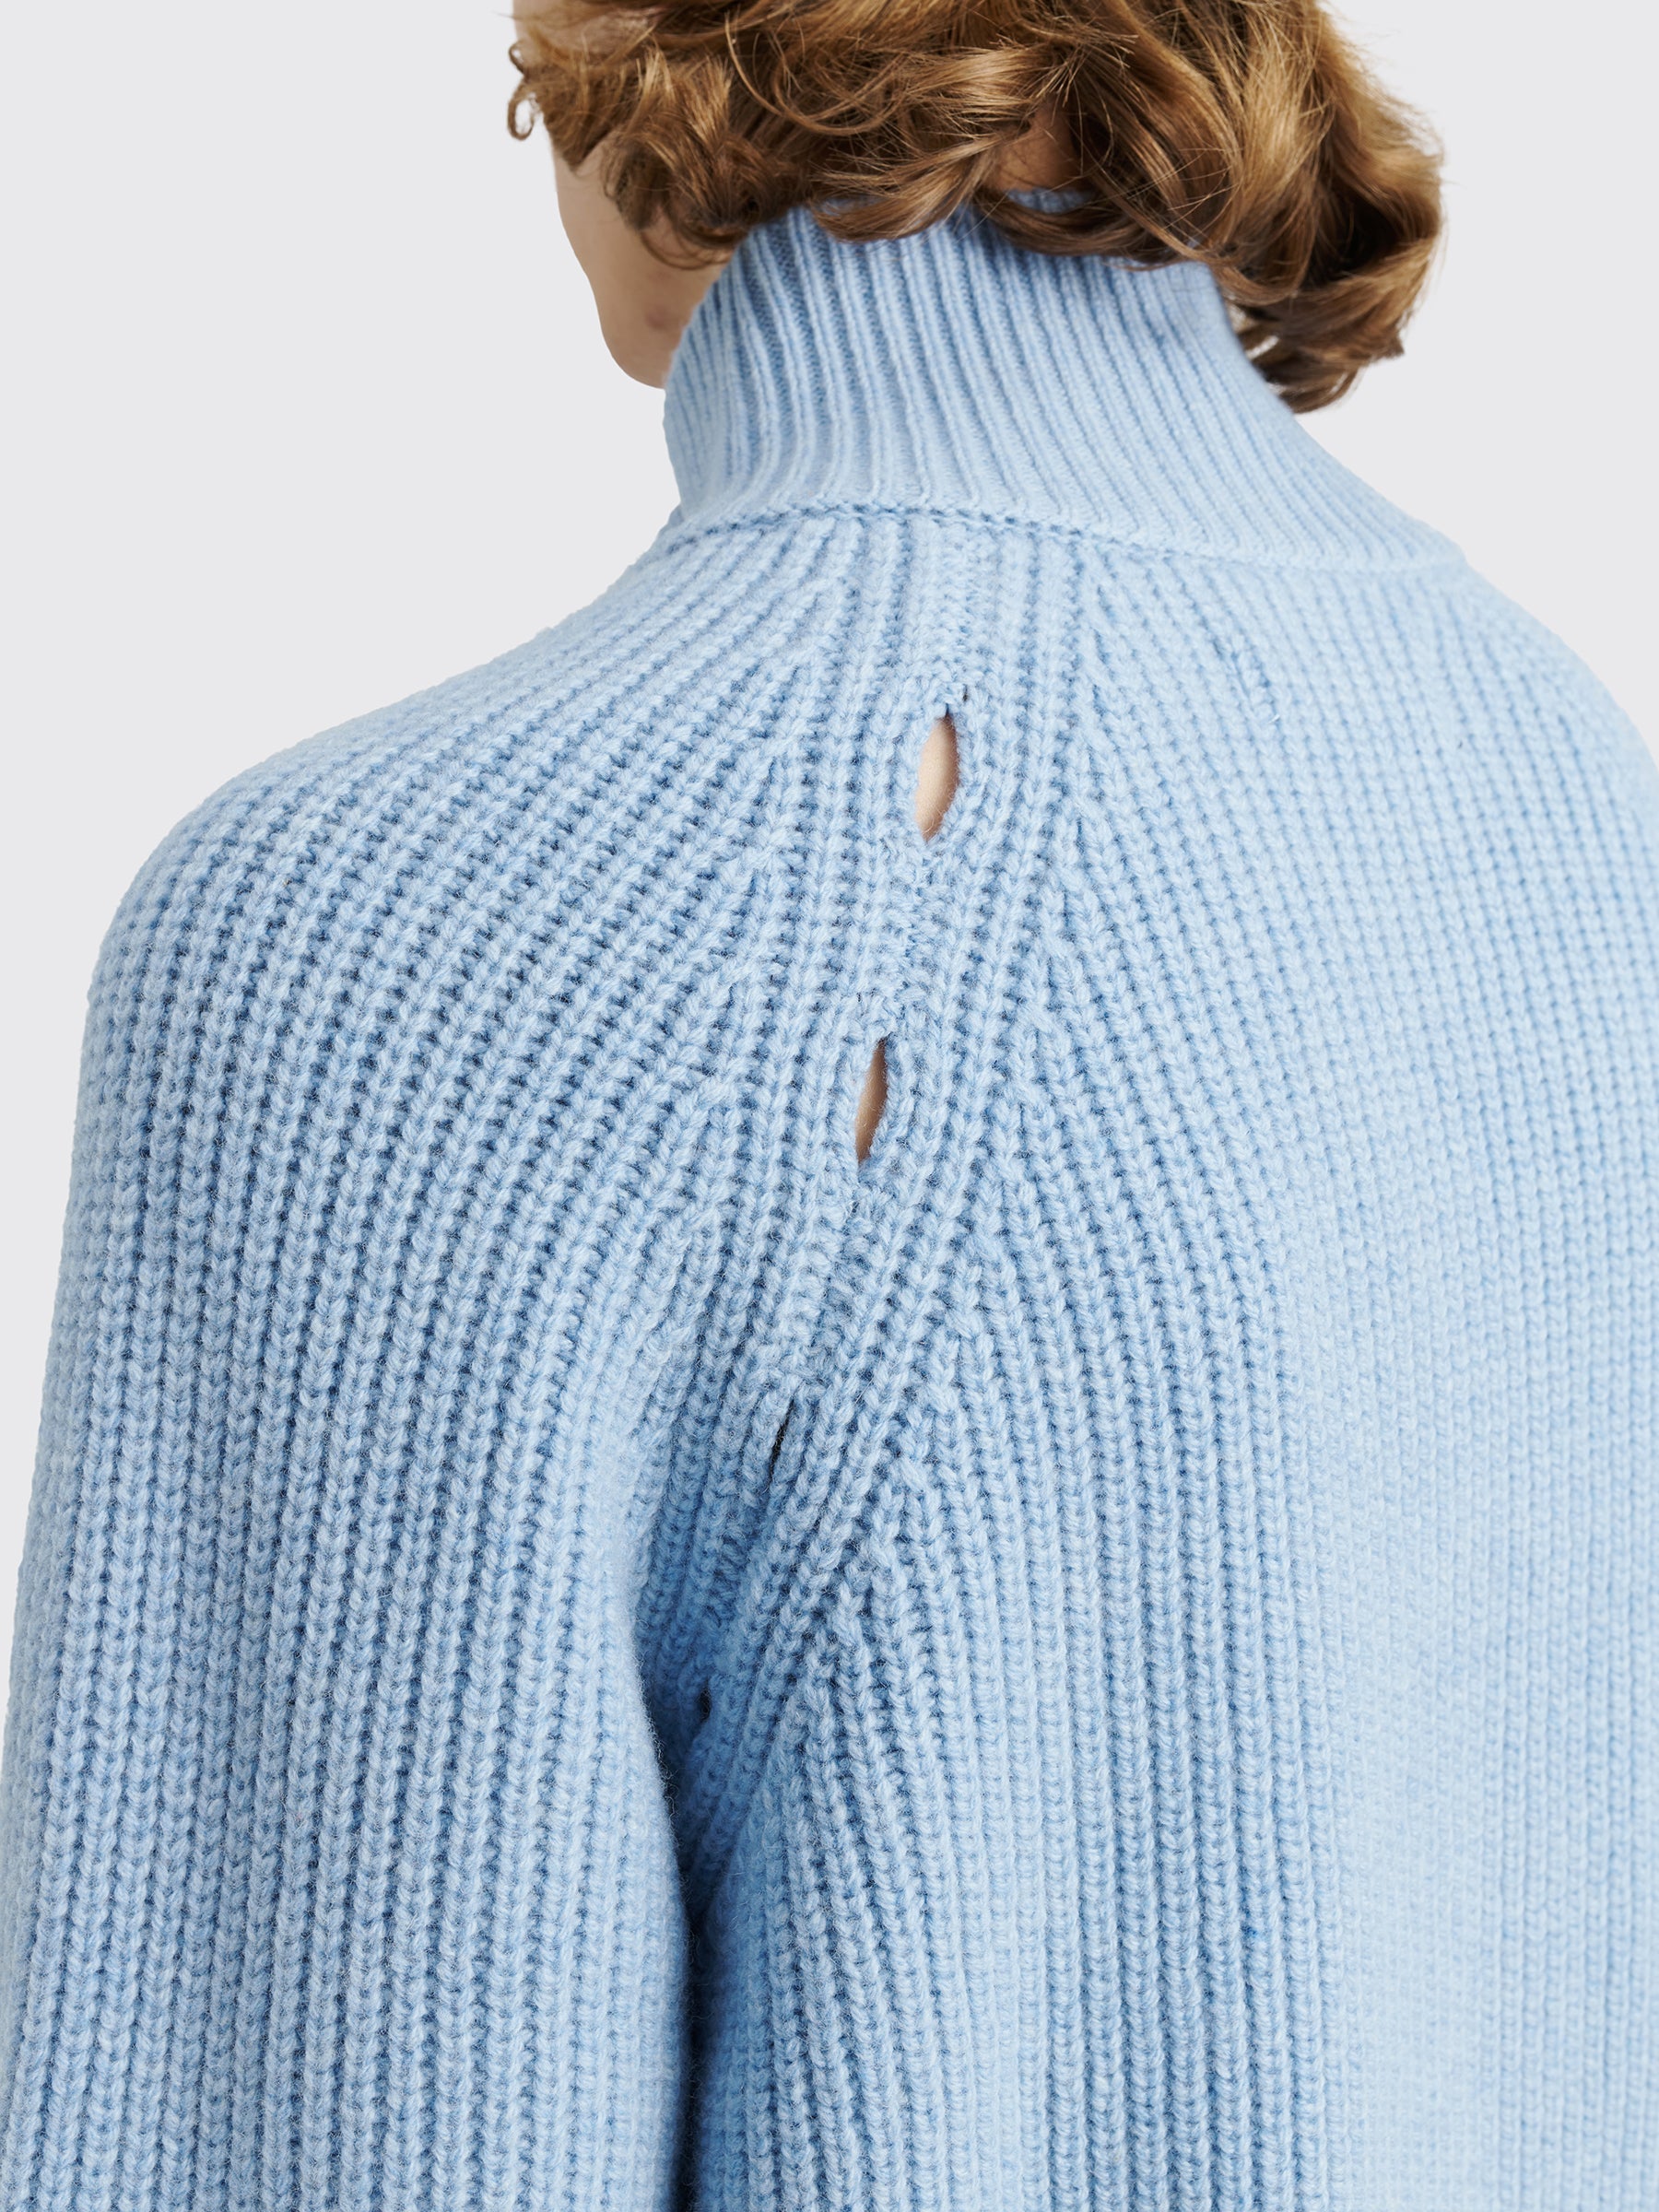 TRÈS BIEN everywear Cut Out Zip Knit Merino Cashmere Light Blue